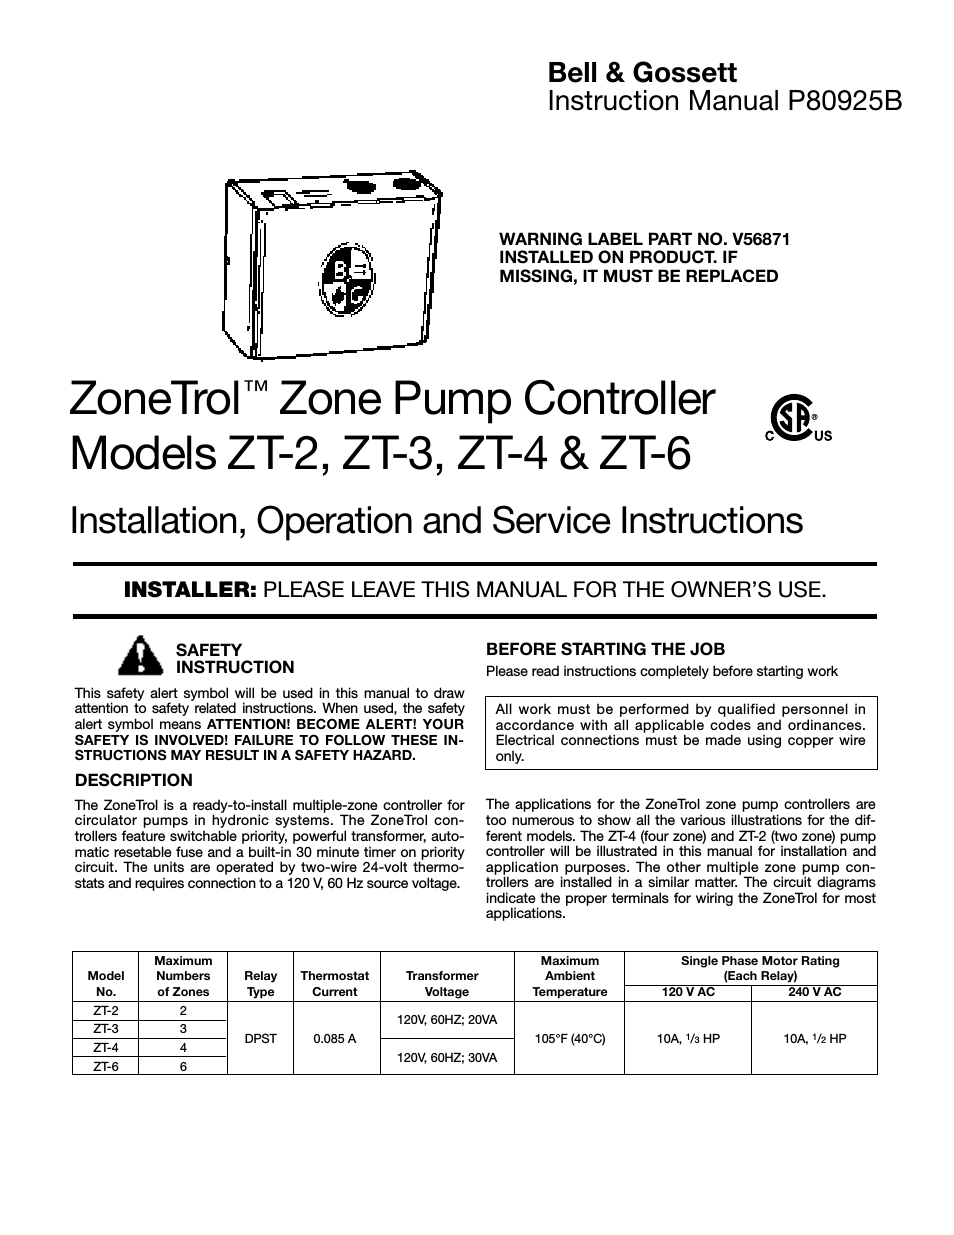 P80925B Zone Trol Zone Pump Controller ZT-4